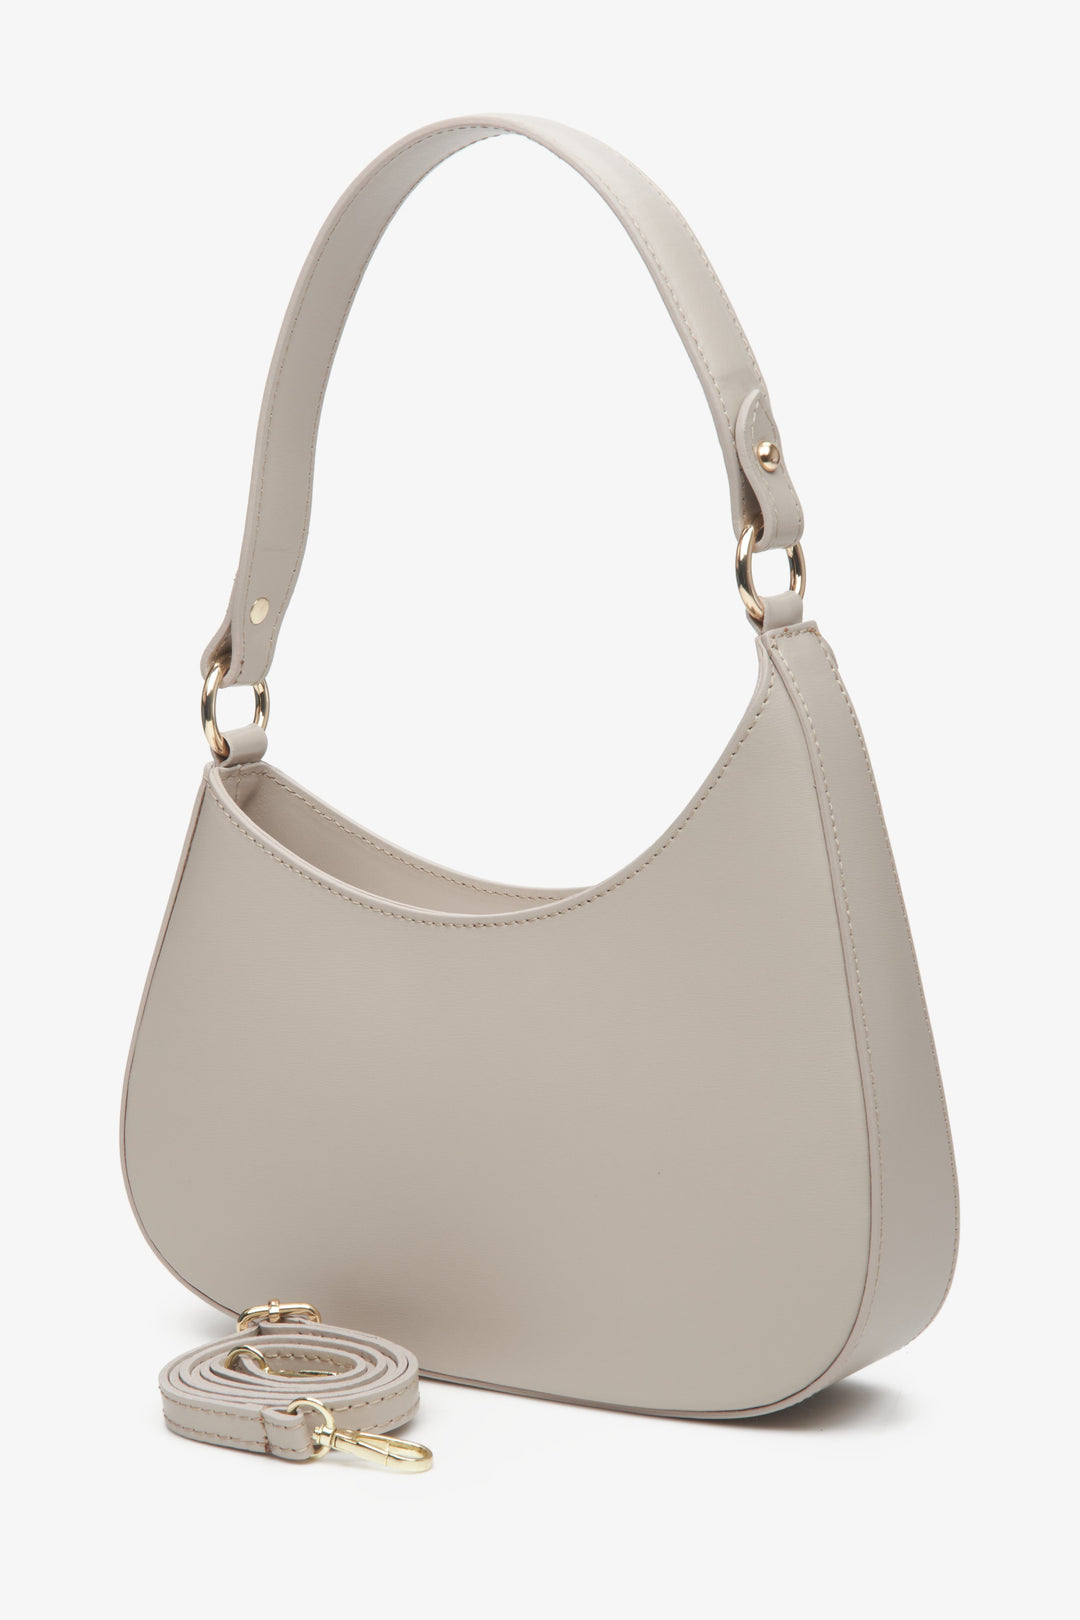 Women's beige and grey Estro shoulder bag with detachable strap.